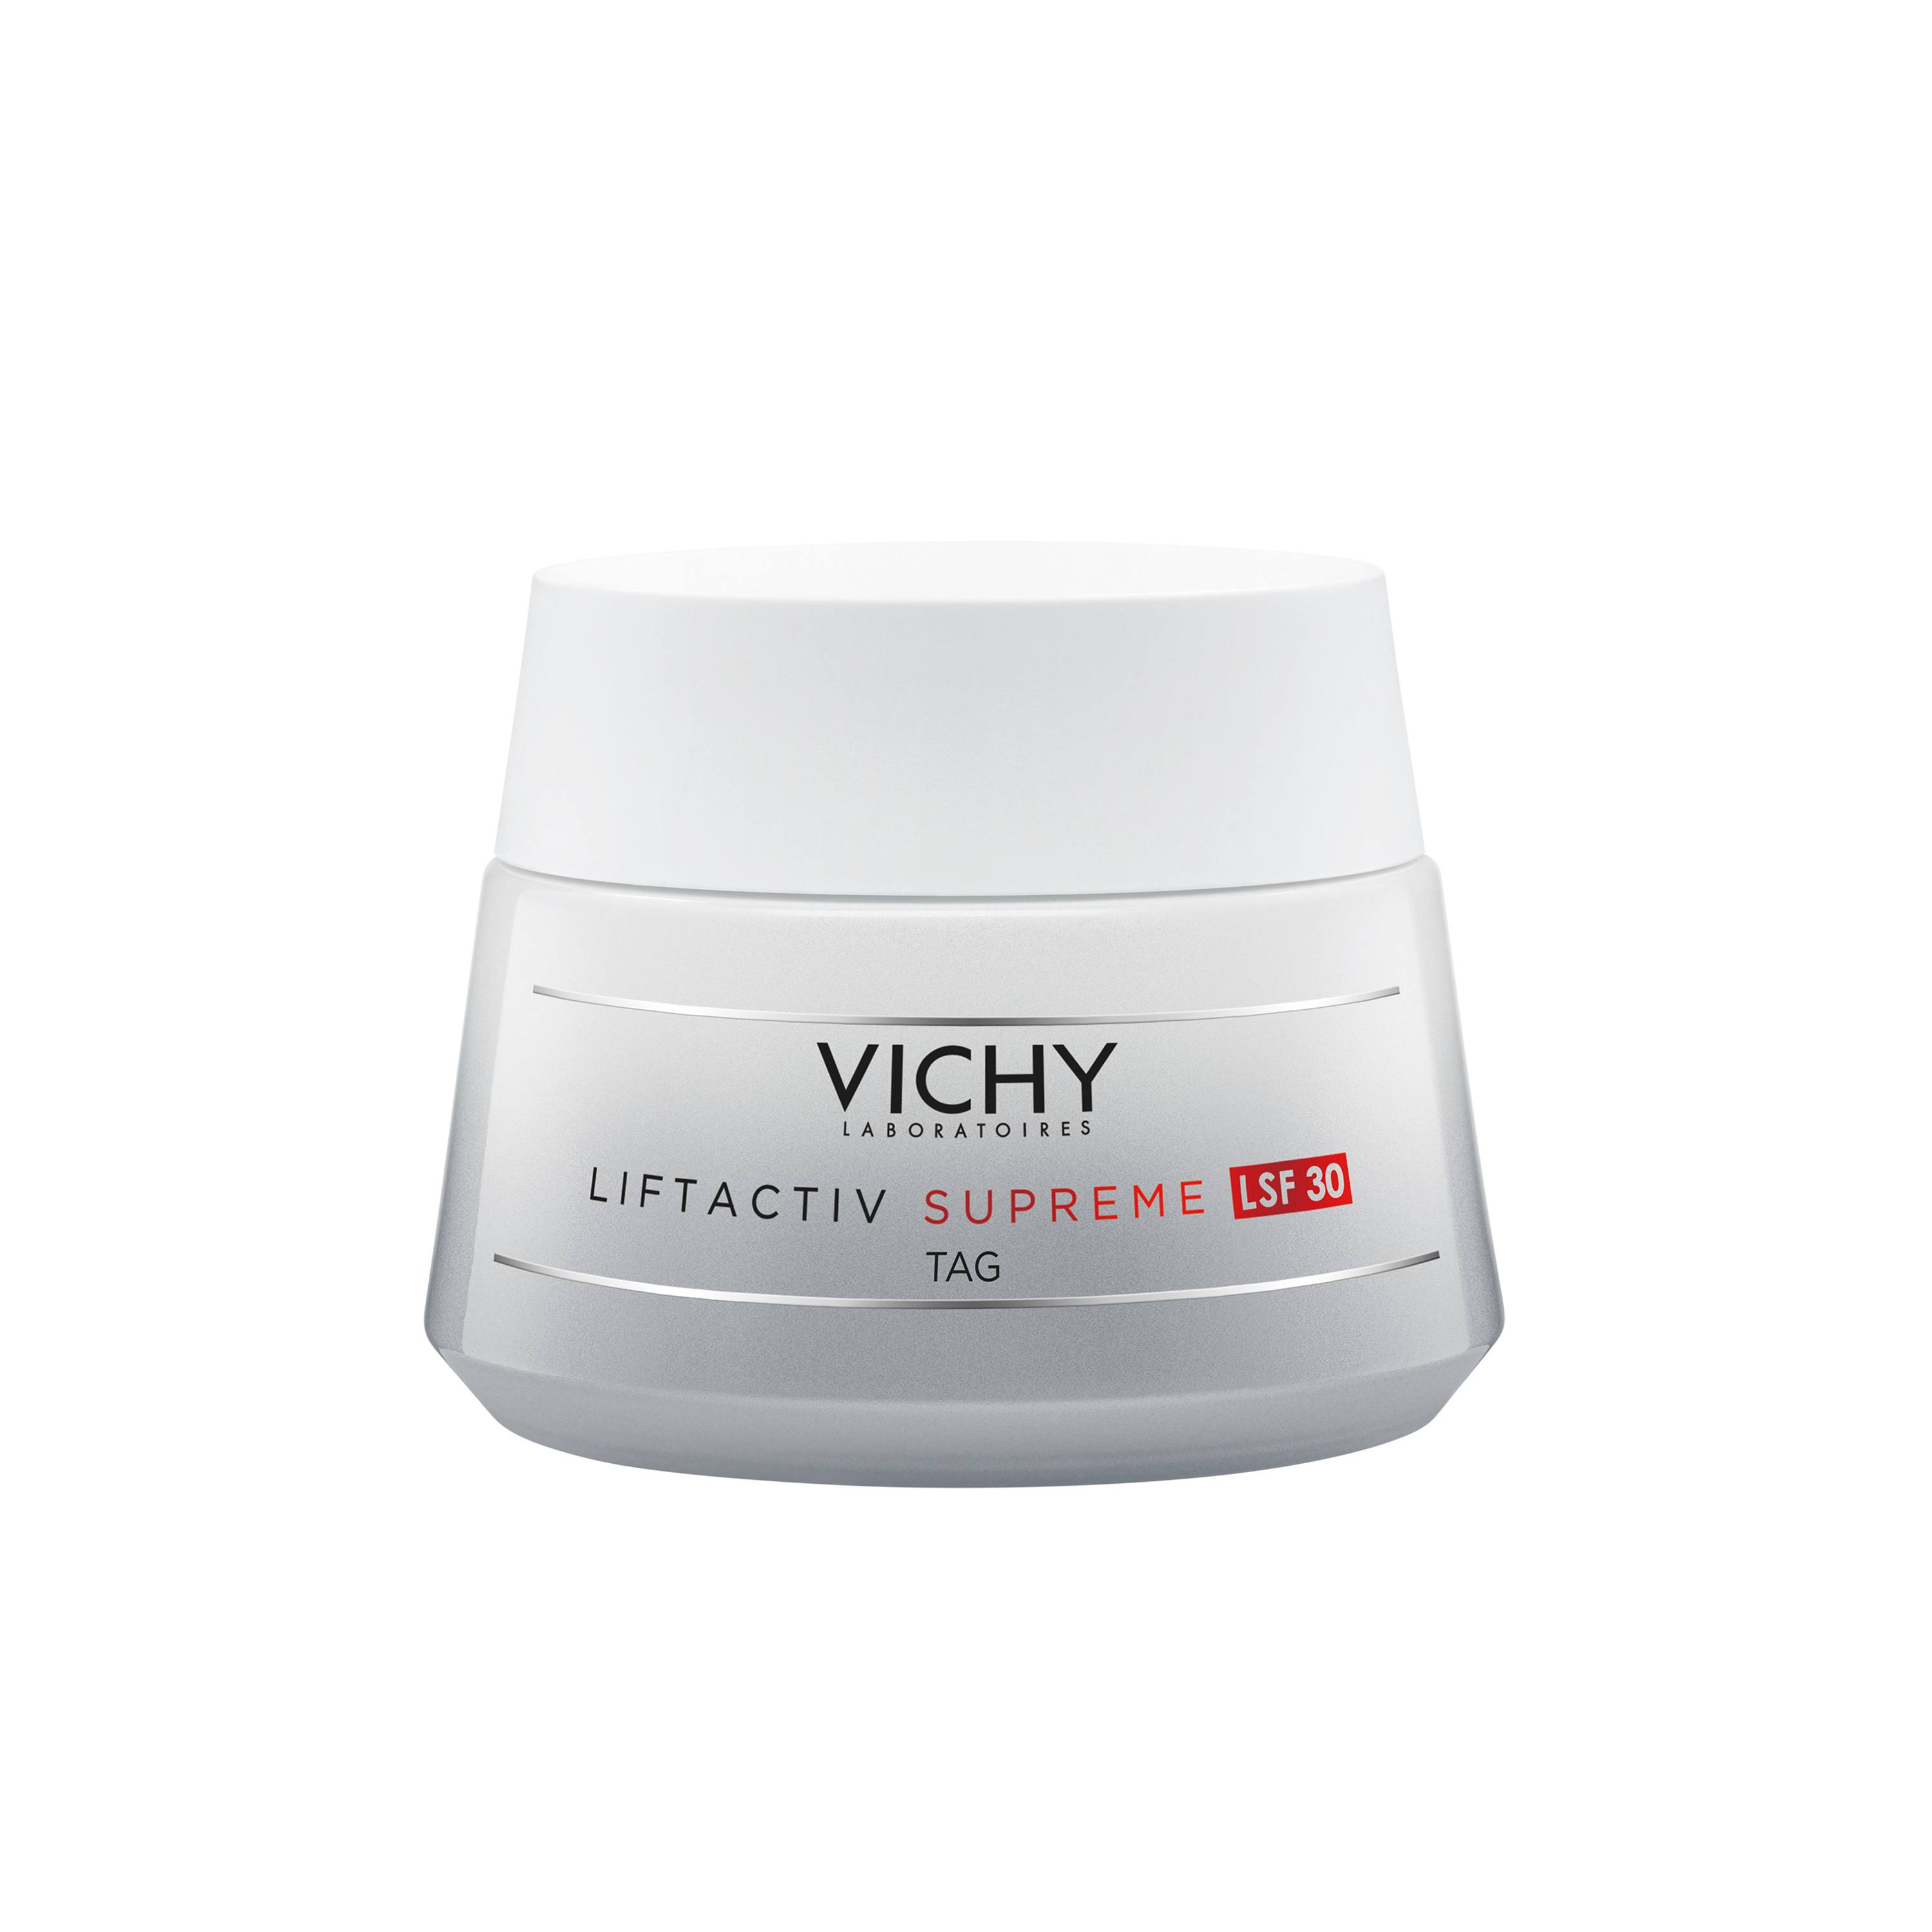 Vichy Liftactiv Supreme Anti-Wrinkle SPF30 50ml